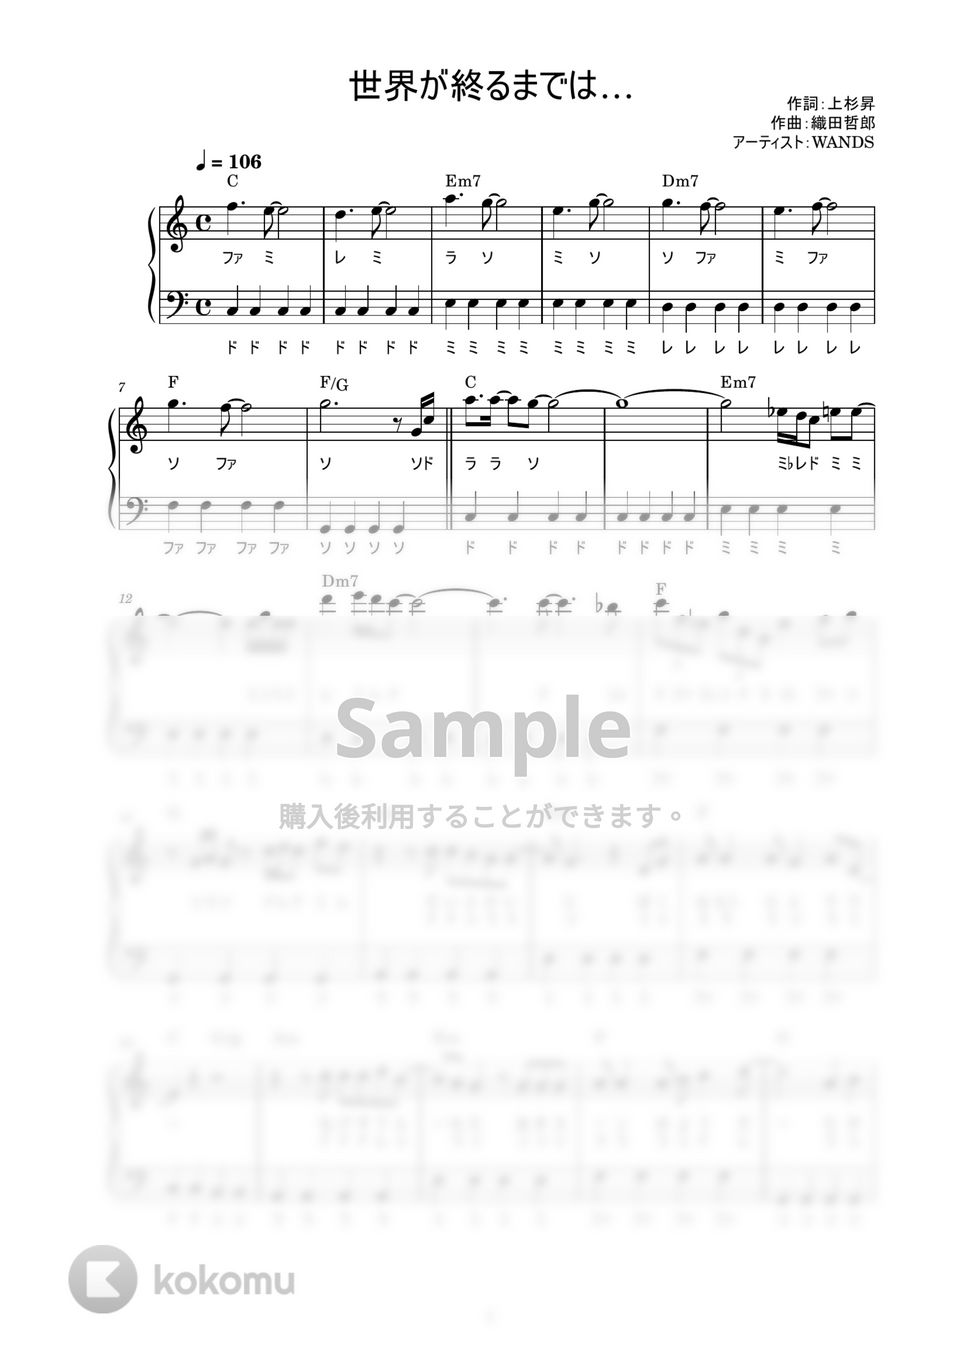 WANDS - 世界が終るまでは... (かんたん / 歌詞付き / ドレミ付き / 初心者) by piano.tokyo